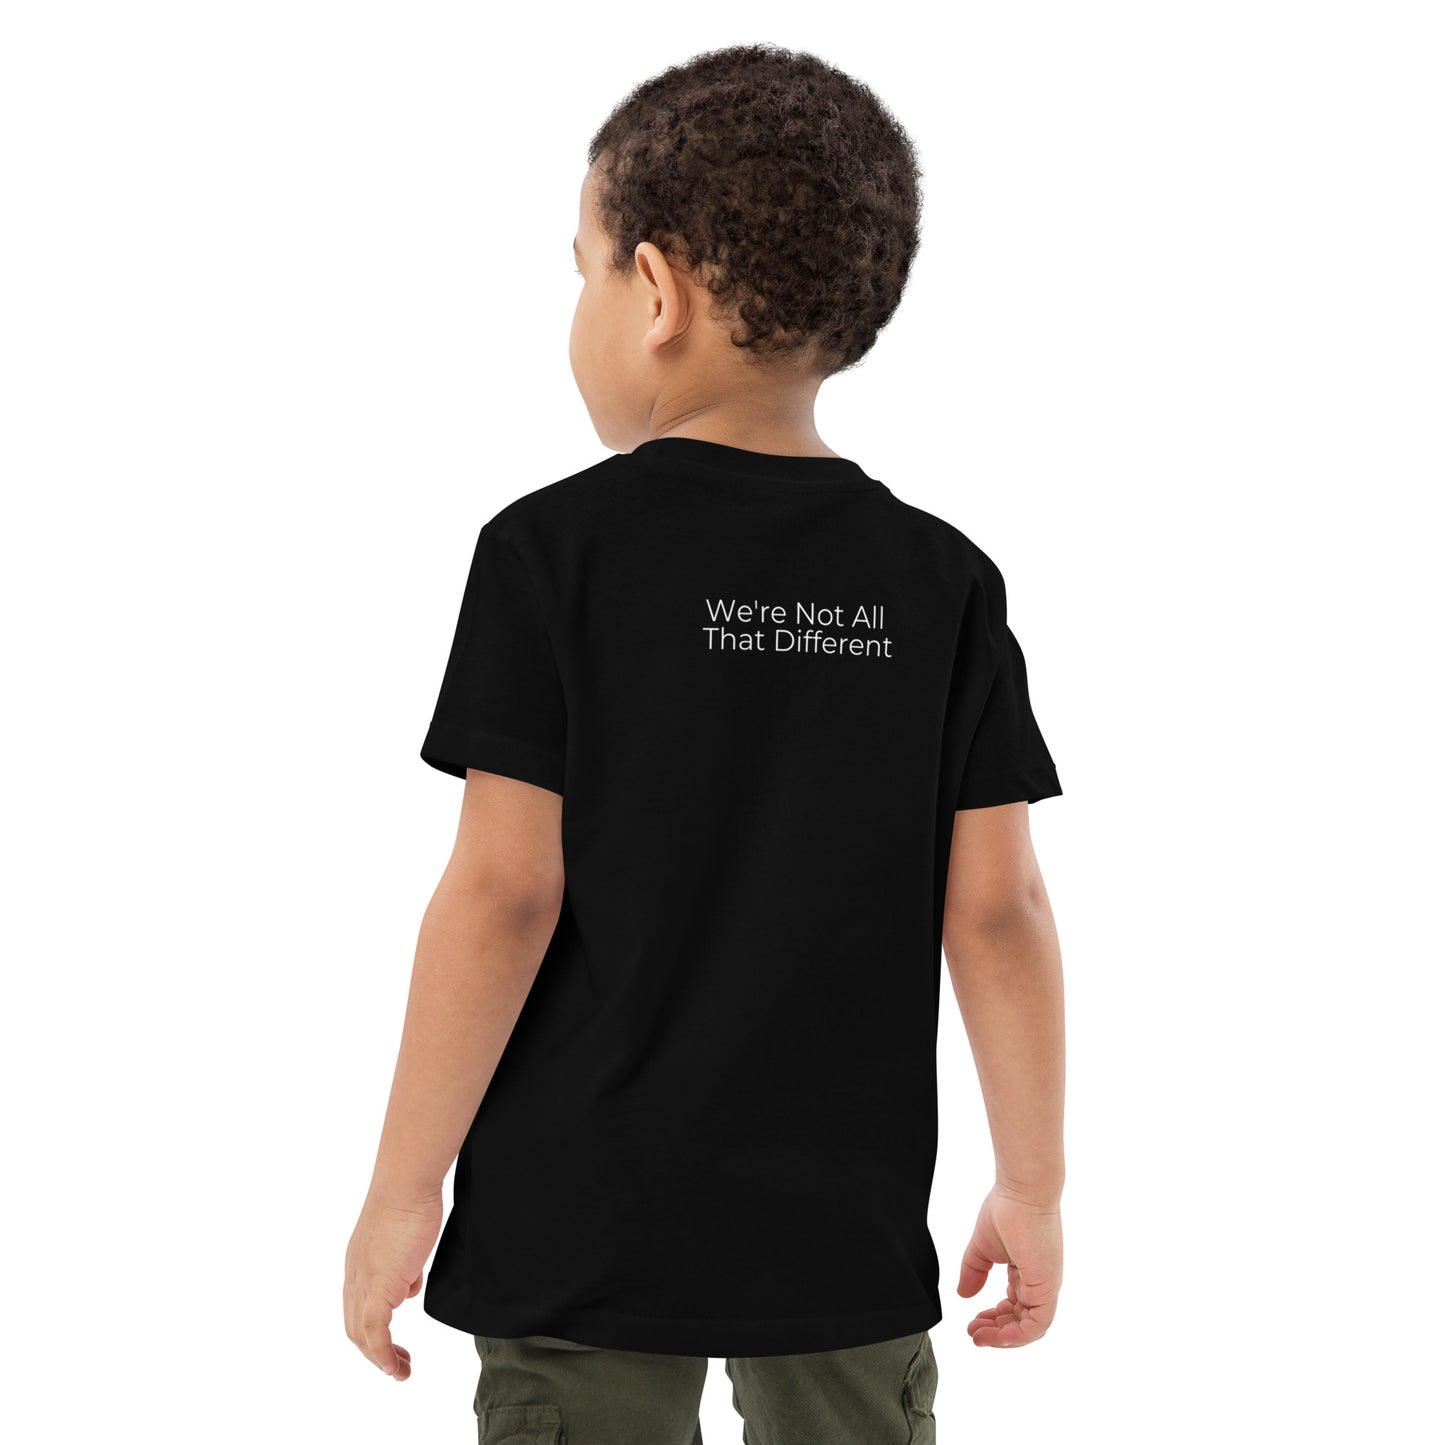 Identify As Love: Organic cotton kids t-shirt